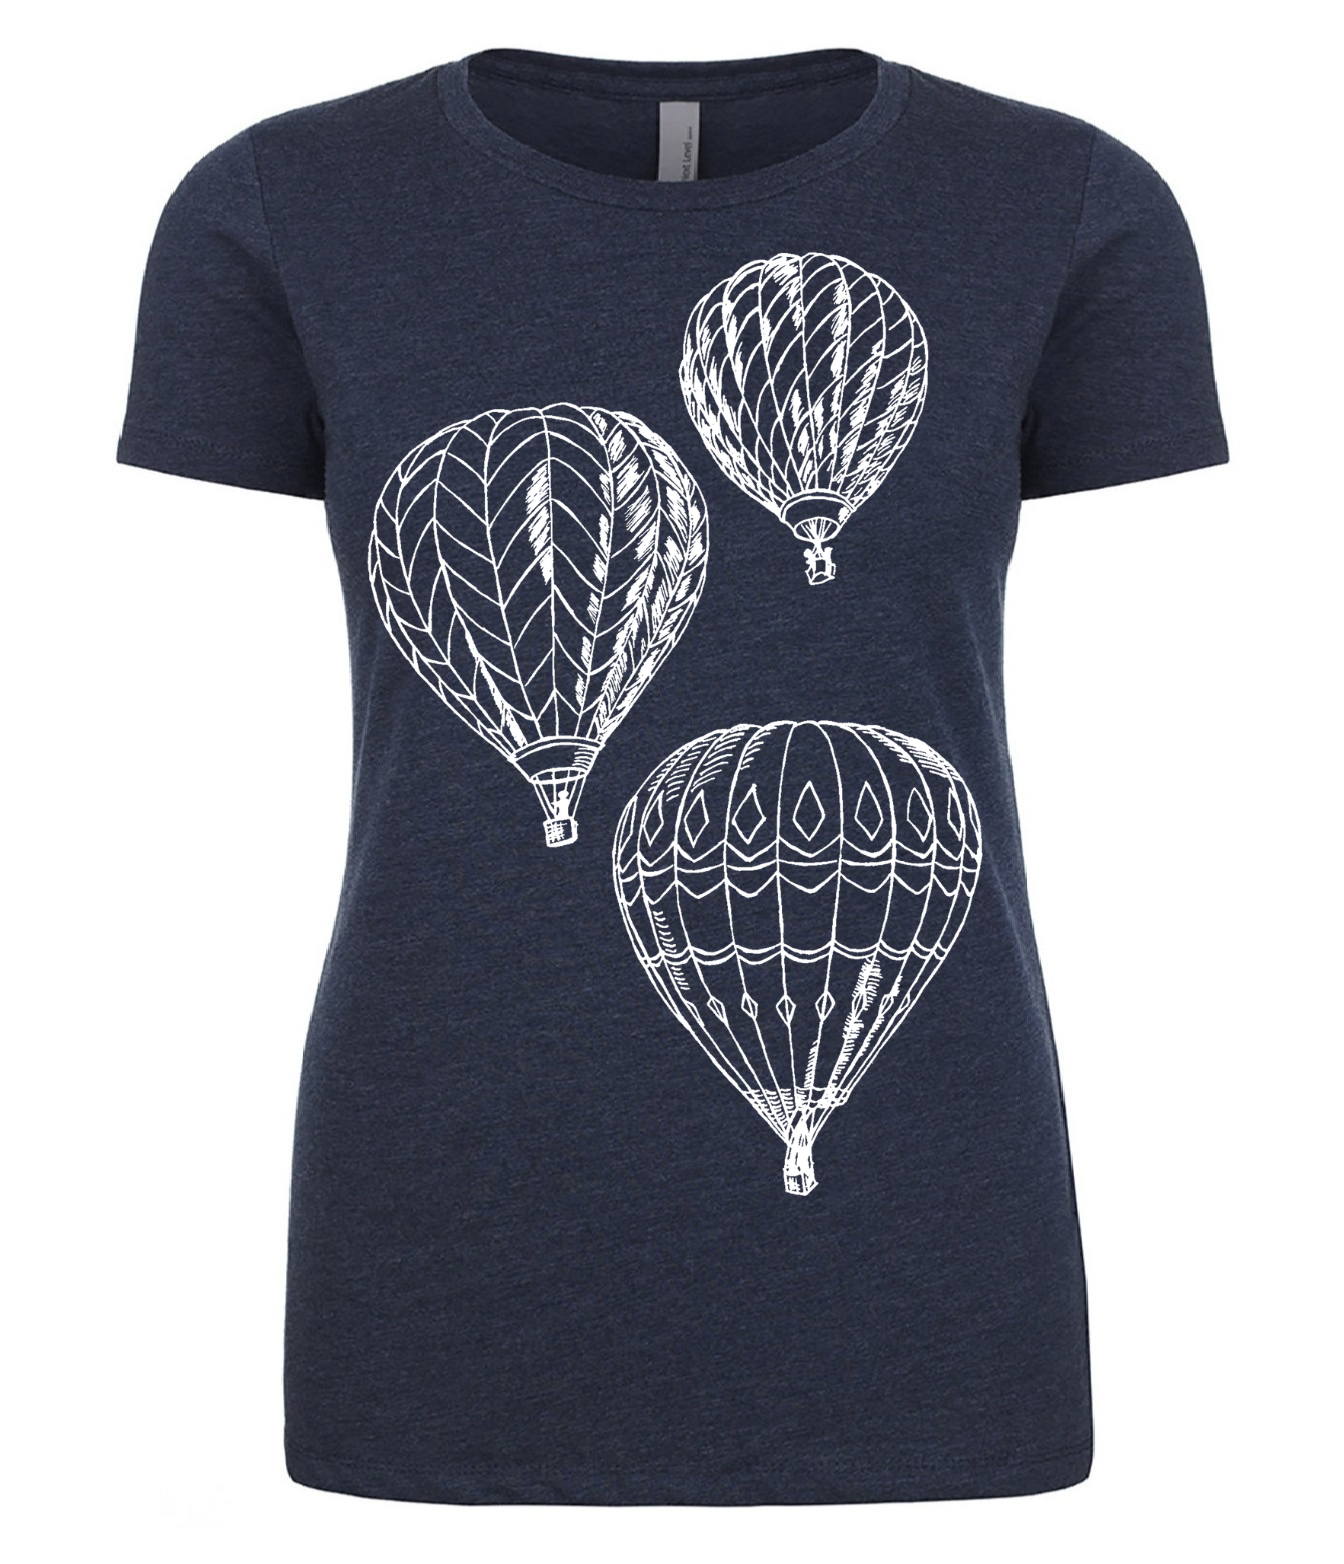 Hot Air Balloons Ladies T Shirt